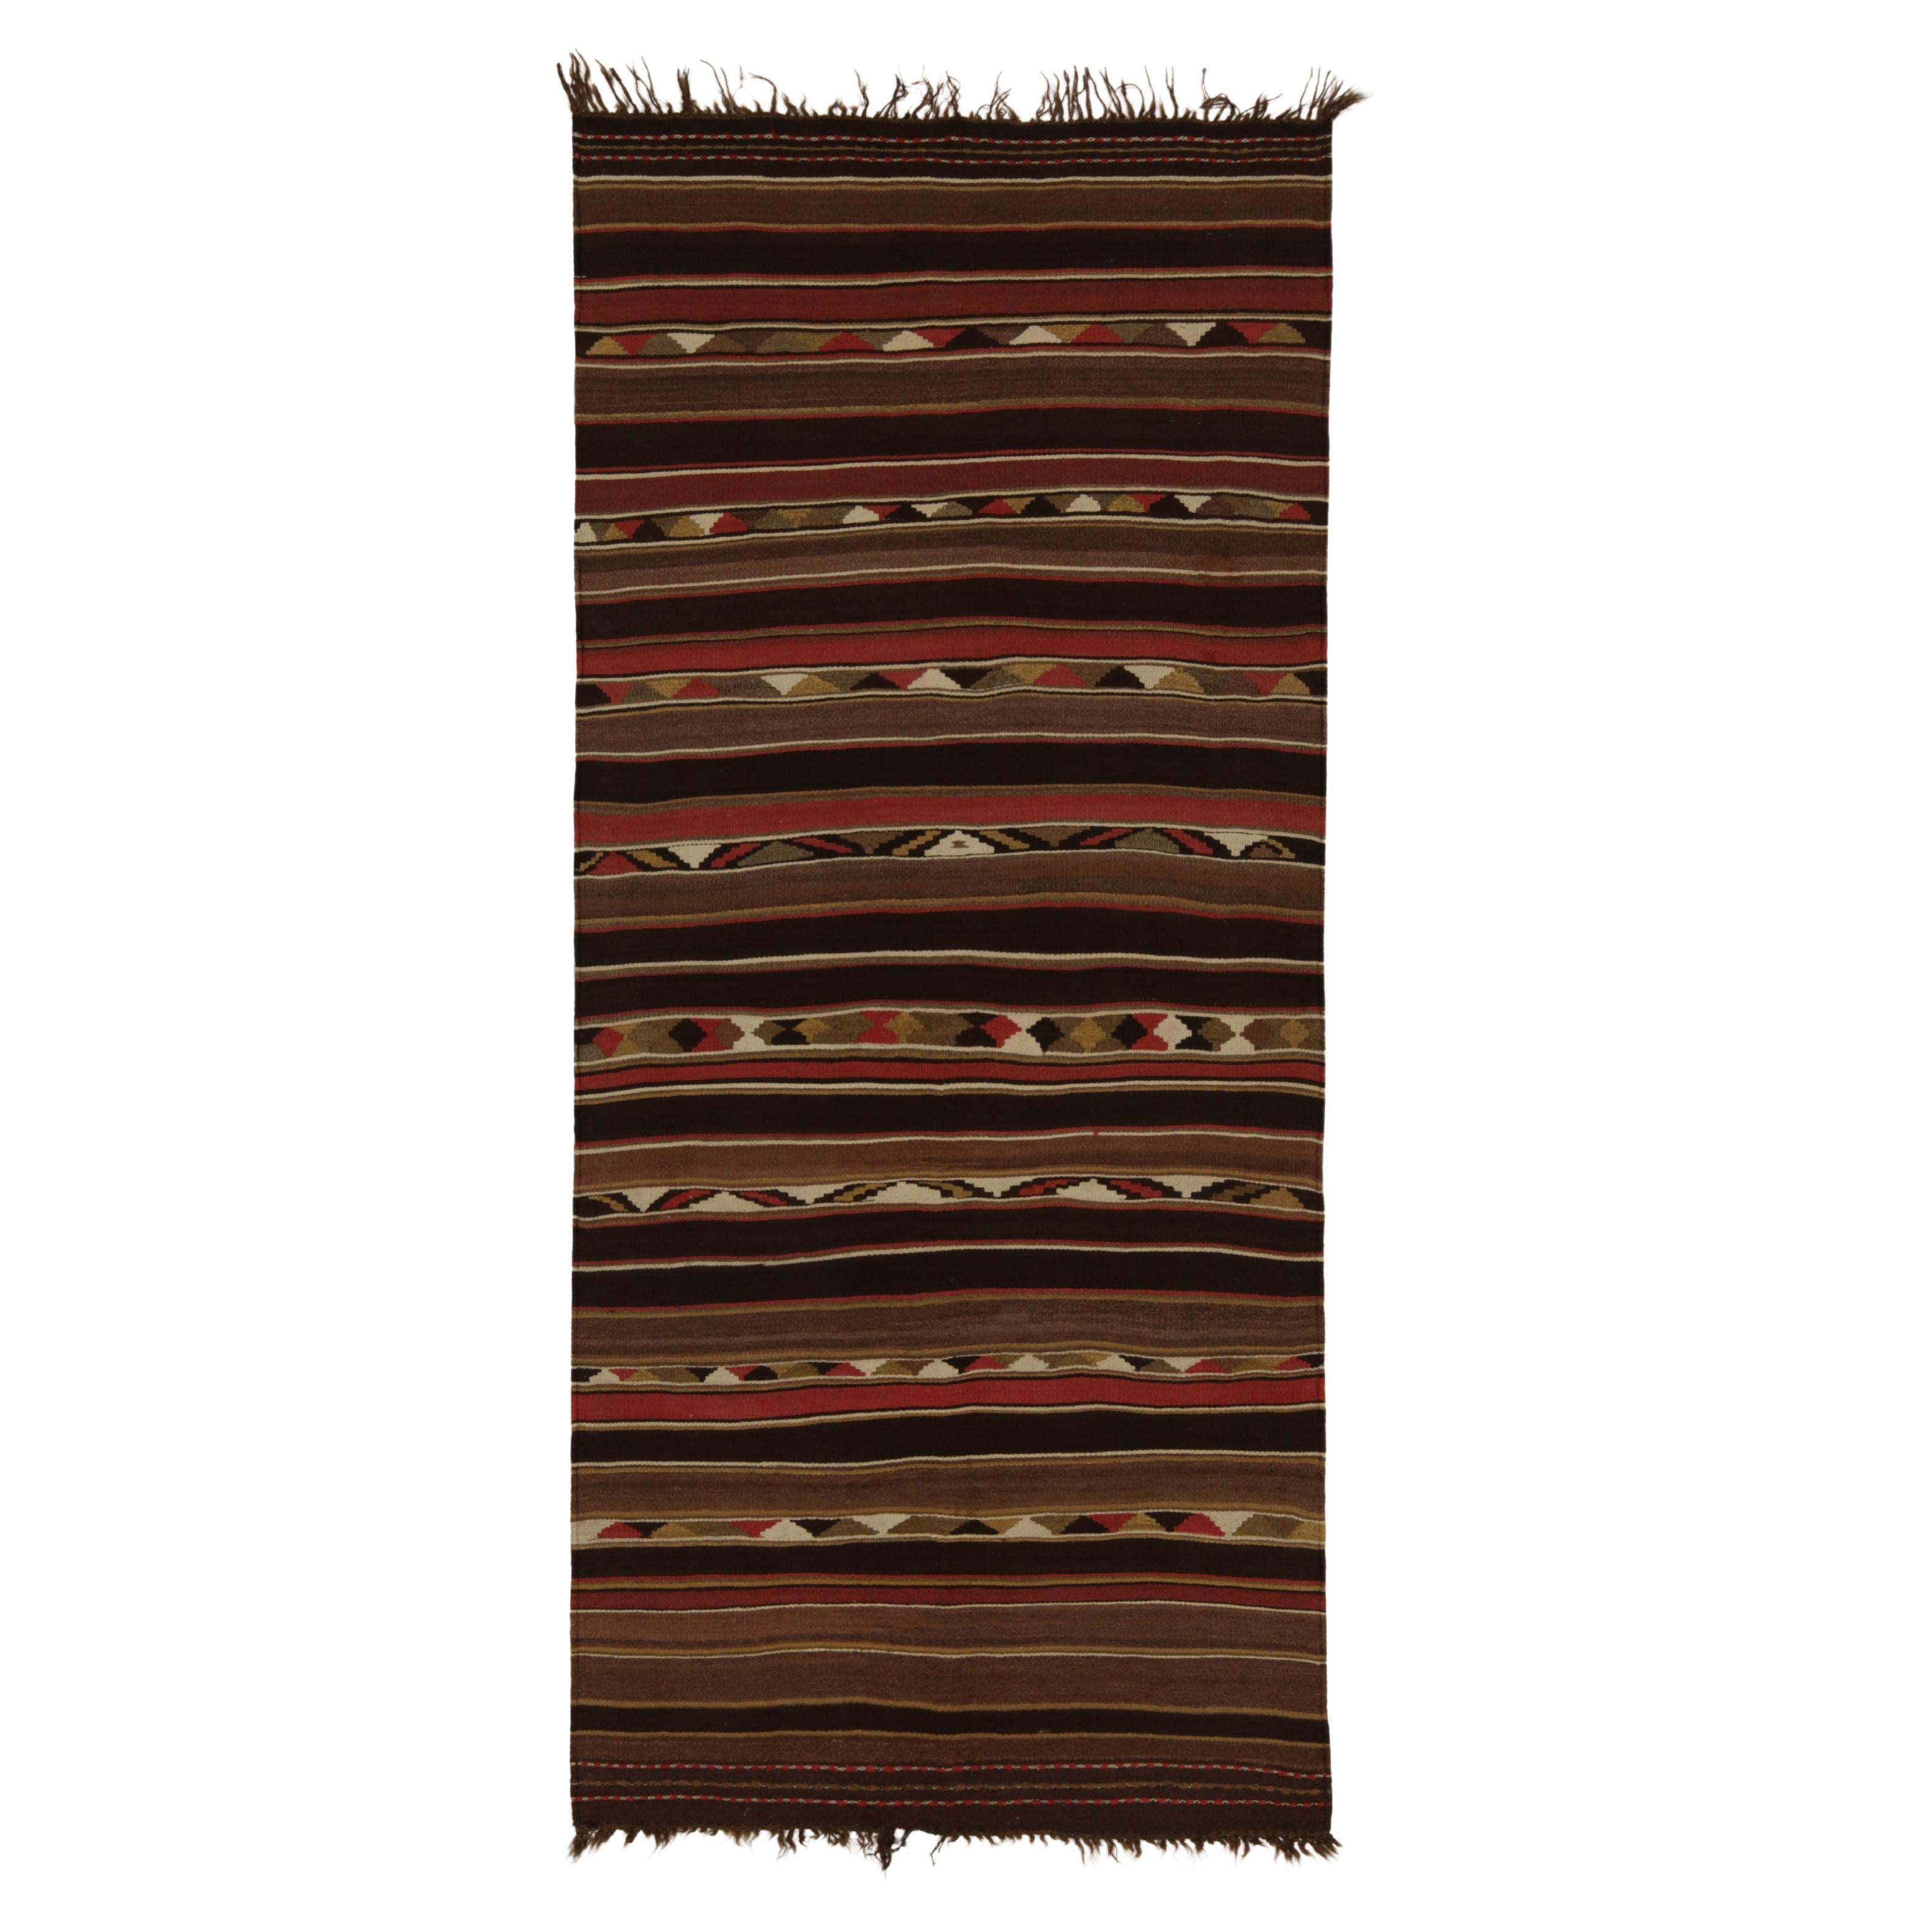 Vintage Persian Tribal Kilim in Brown and Red Stripes - by Rug & Kilim